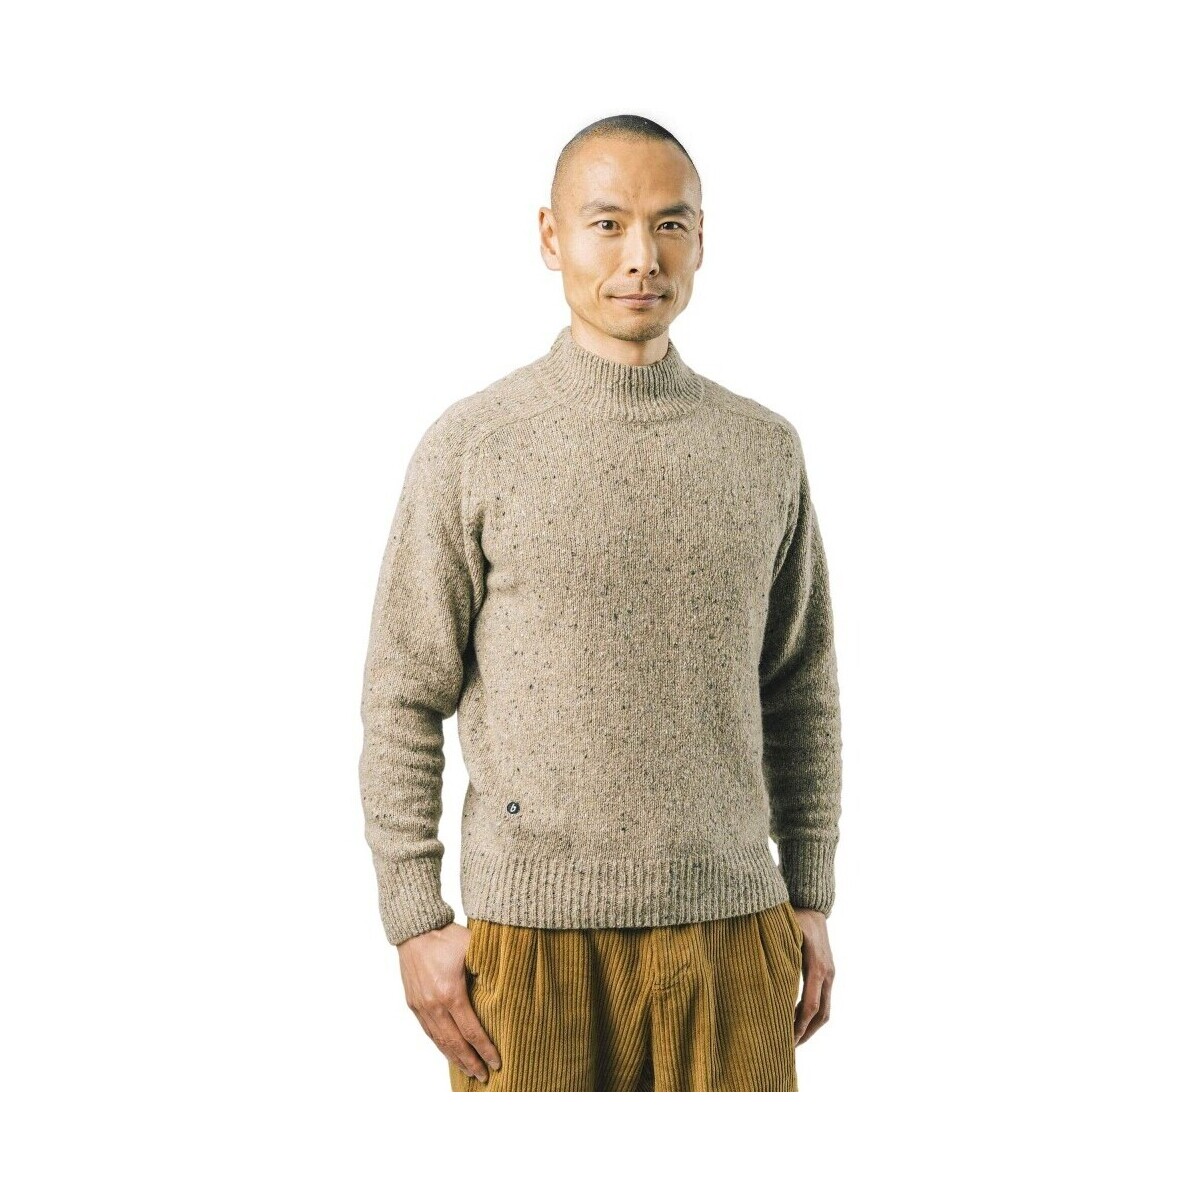 Textil Muži Svetry Brava Fabrics Perkins Neck Sweater - Ecru Béžová